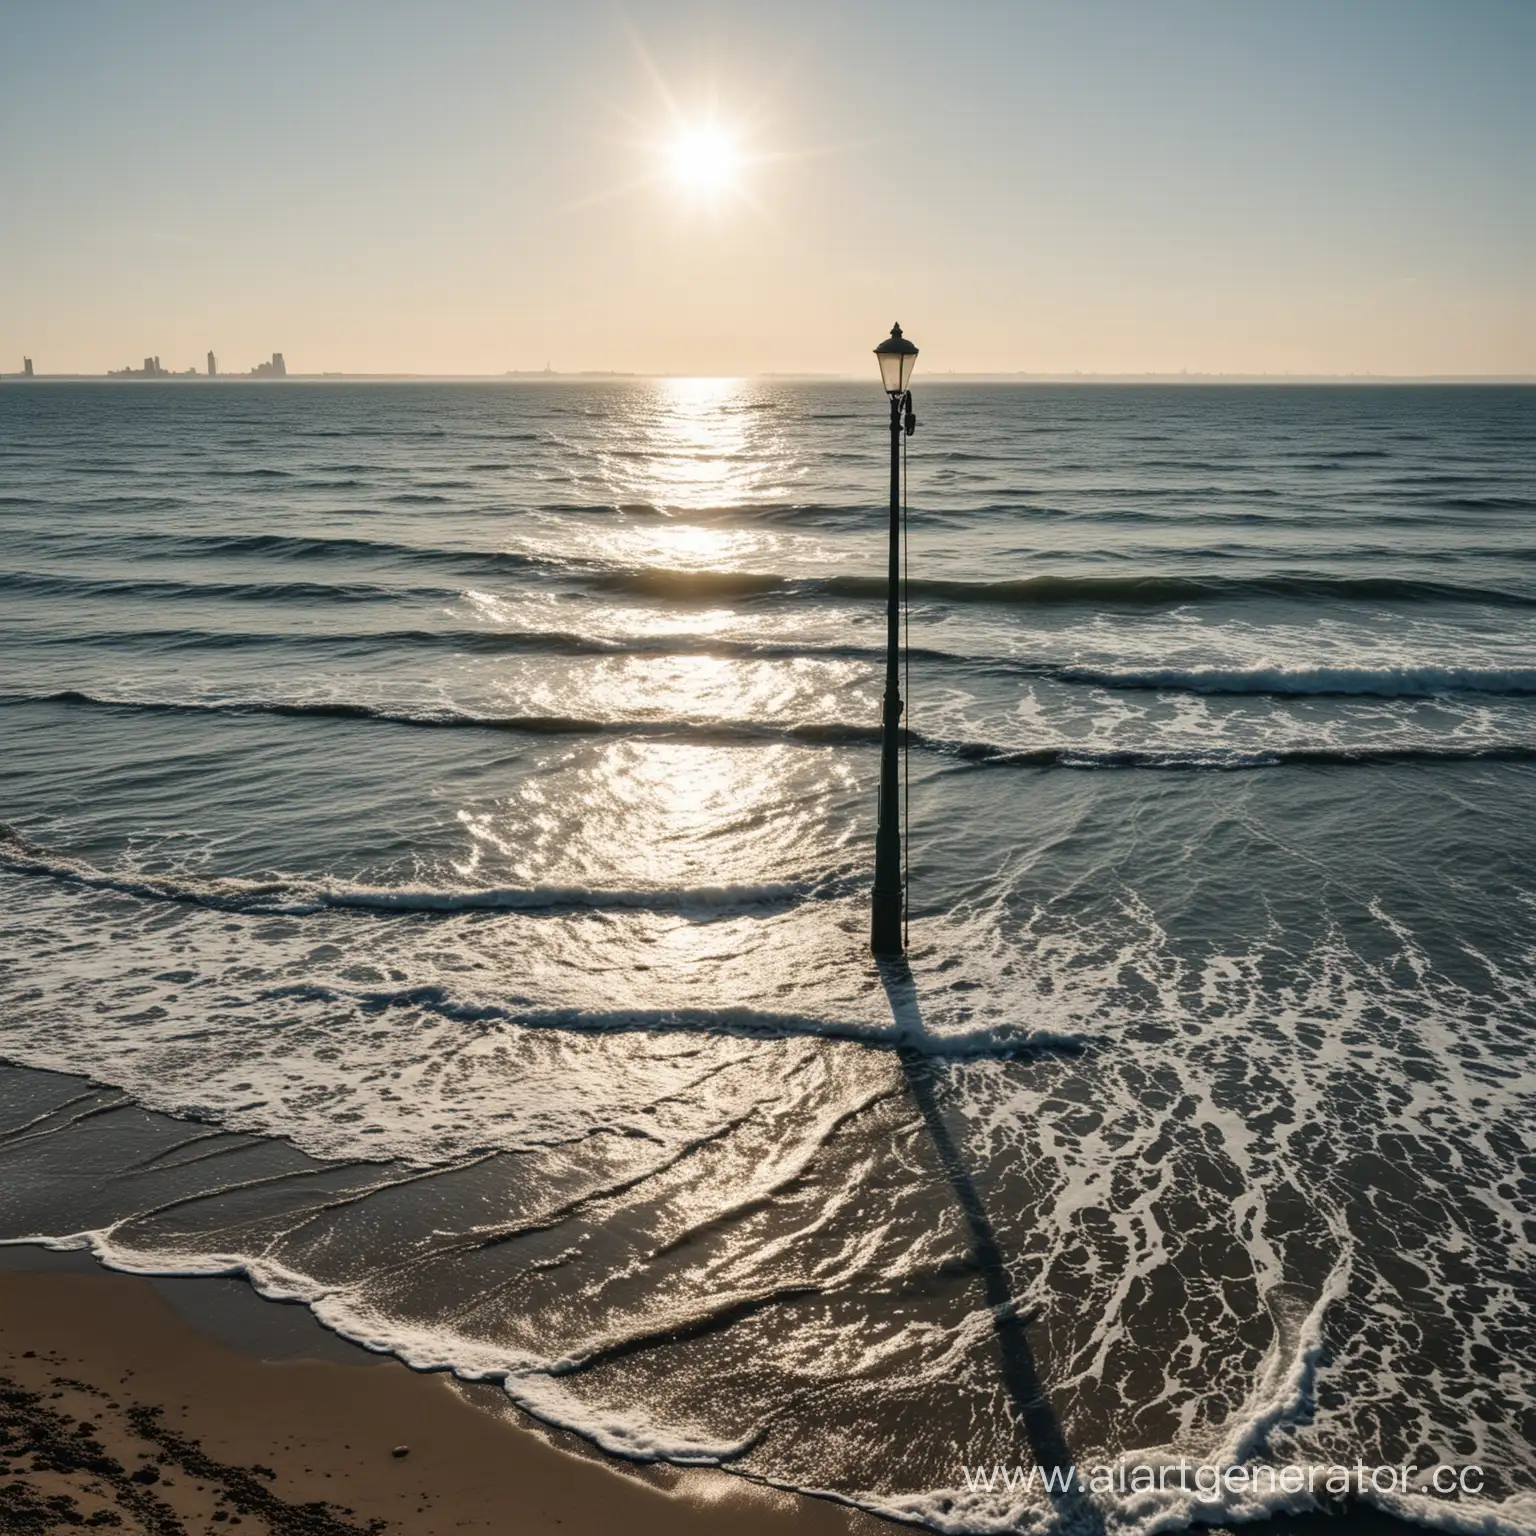 Modern-City-Streetlight-Pole-Amidst-Empty-Sea-on-Bright-Day